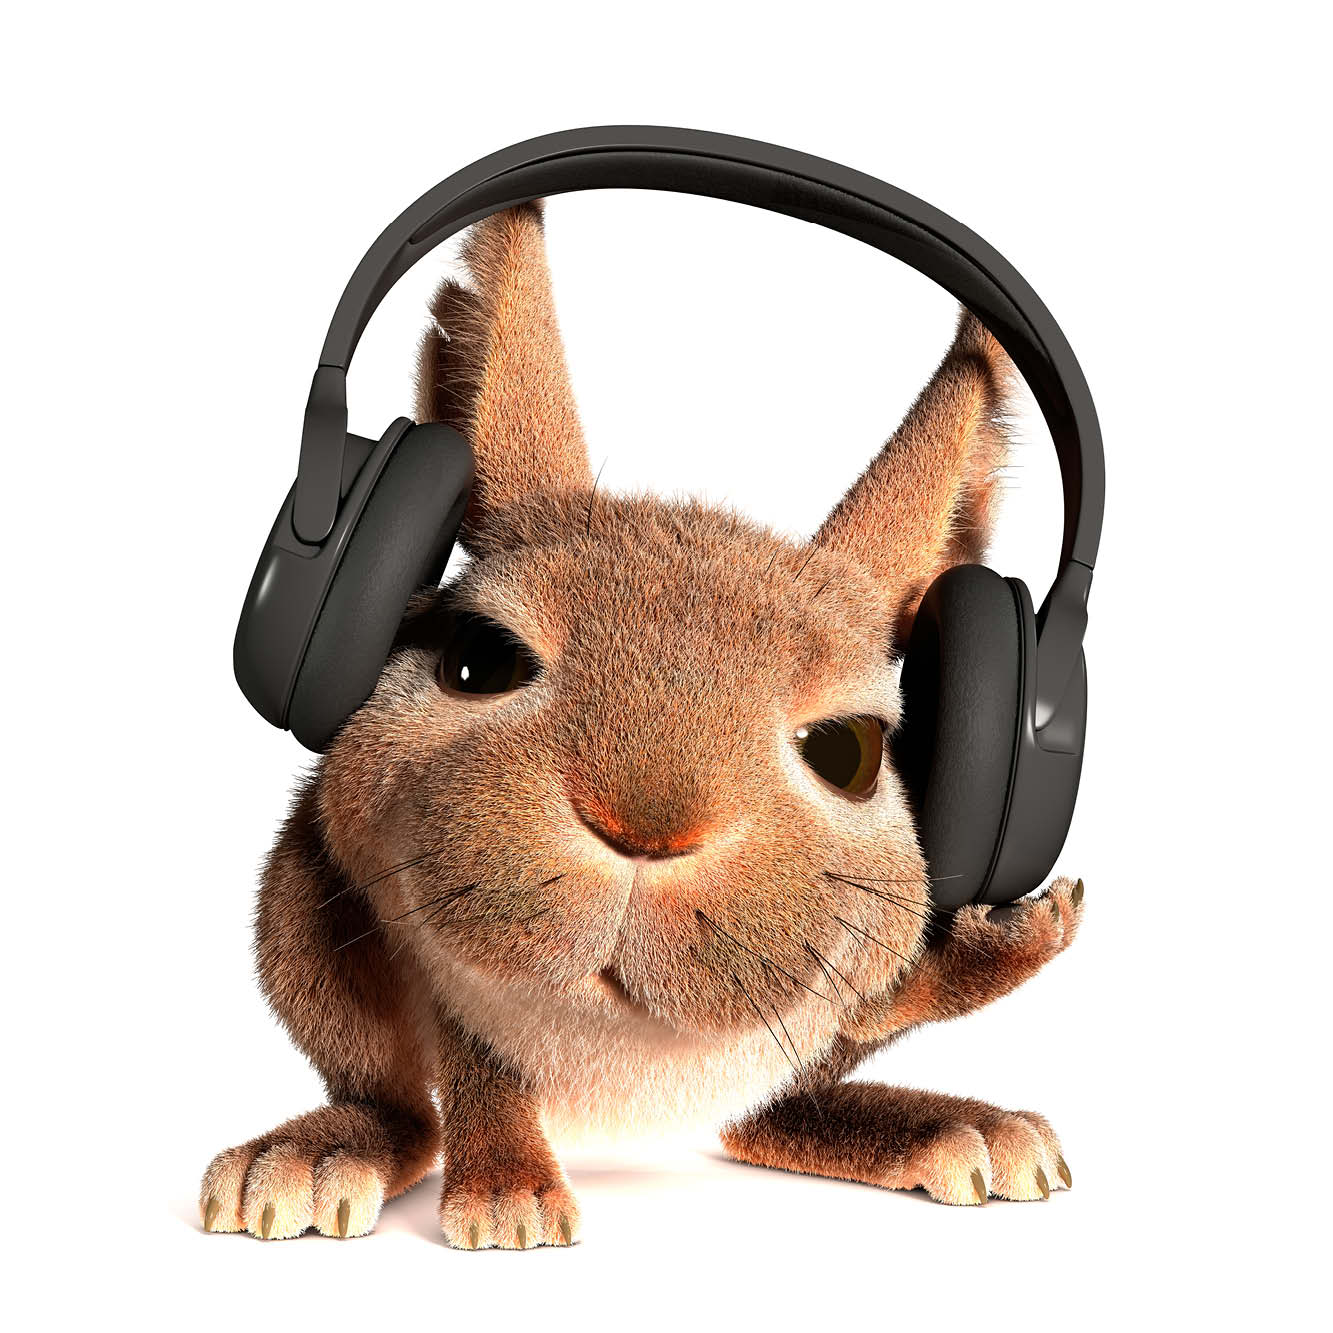 Rabbit in headphones v2